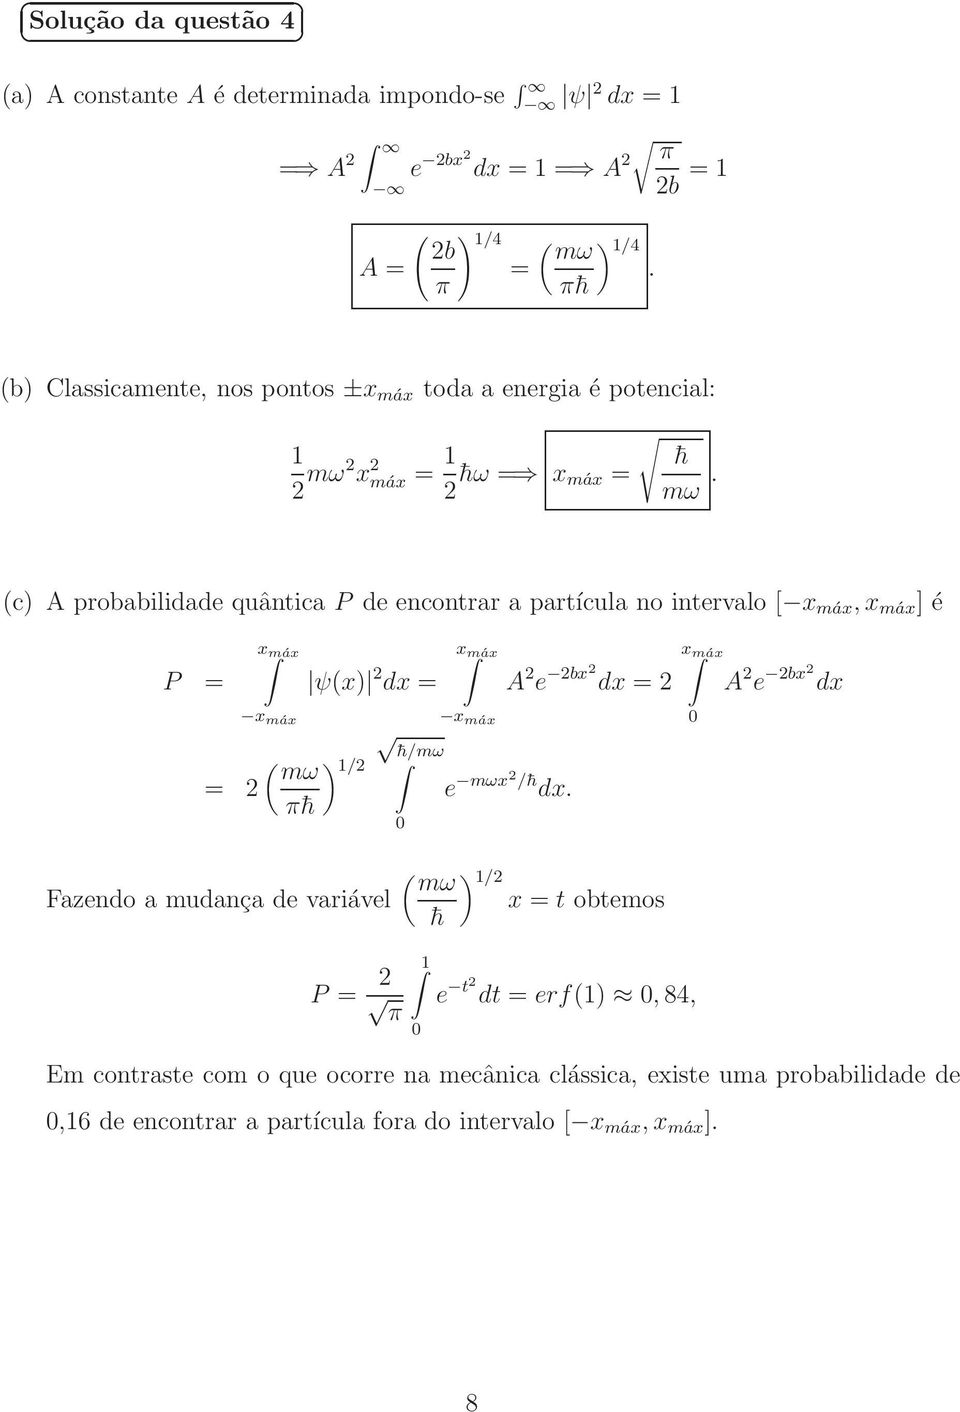 (c) A probabilidade quântica P de encontrar a partícula no intervalo [ x máx,x máx ] é P = = x máx x máx ψ(x) dx = A e bx dx = x máx x máx h/mω ( ) mω / e mωx /